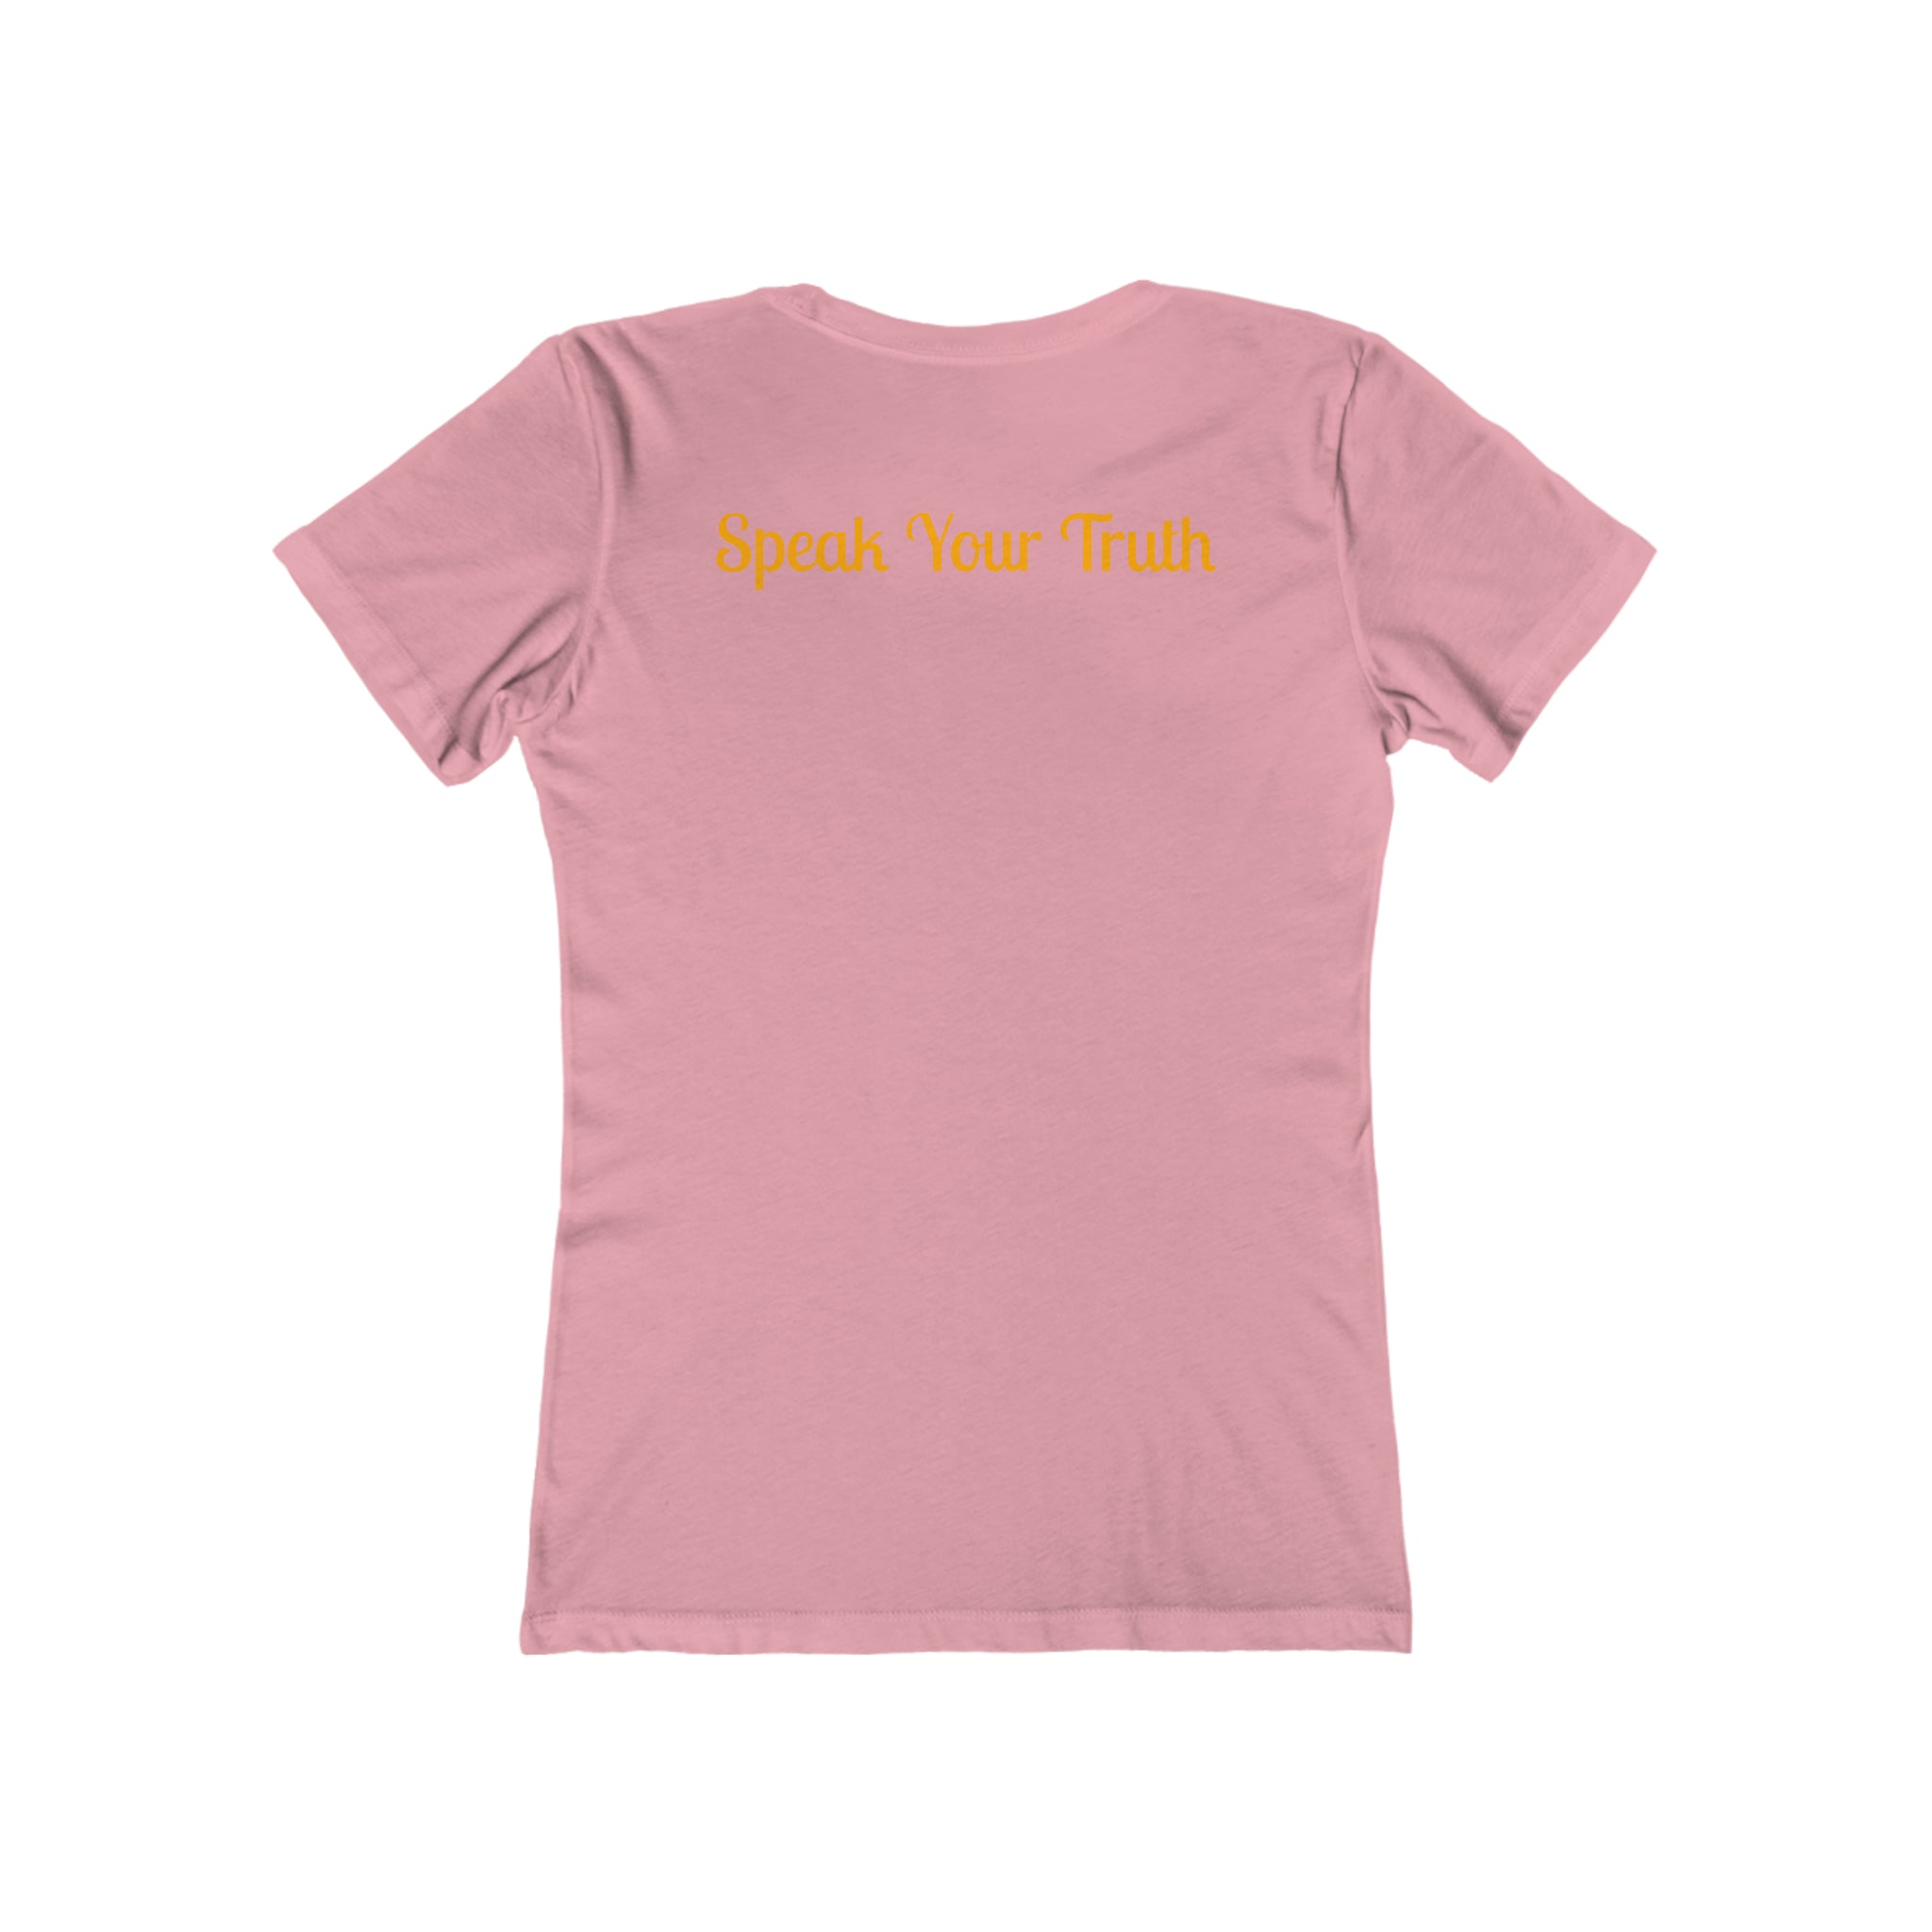 Speak Your Truth Boyfriend Tee: Advocate Authenticity Solid Light Pink Awareness Break the Stigma Mental Health Support Pledge Donation slim fit shirt Tee women shirt T-Shirt 11849755538425657830_2048_0098a087-f801-49e0-94b4-be920777e8a9 Printify